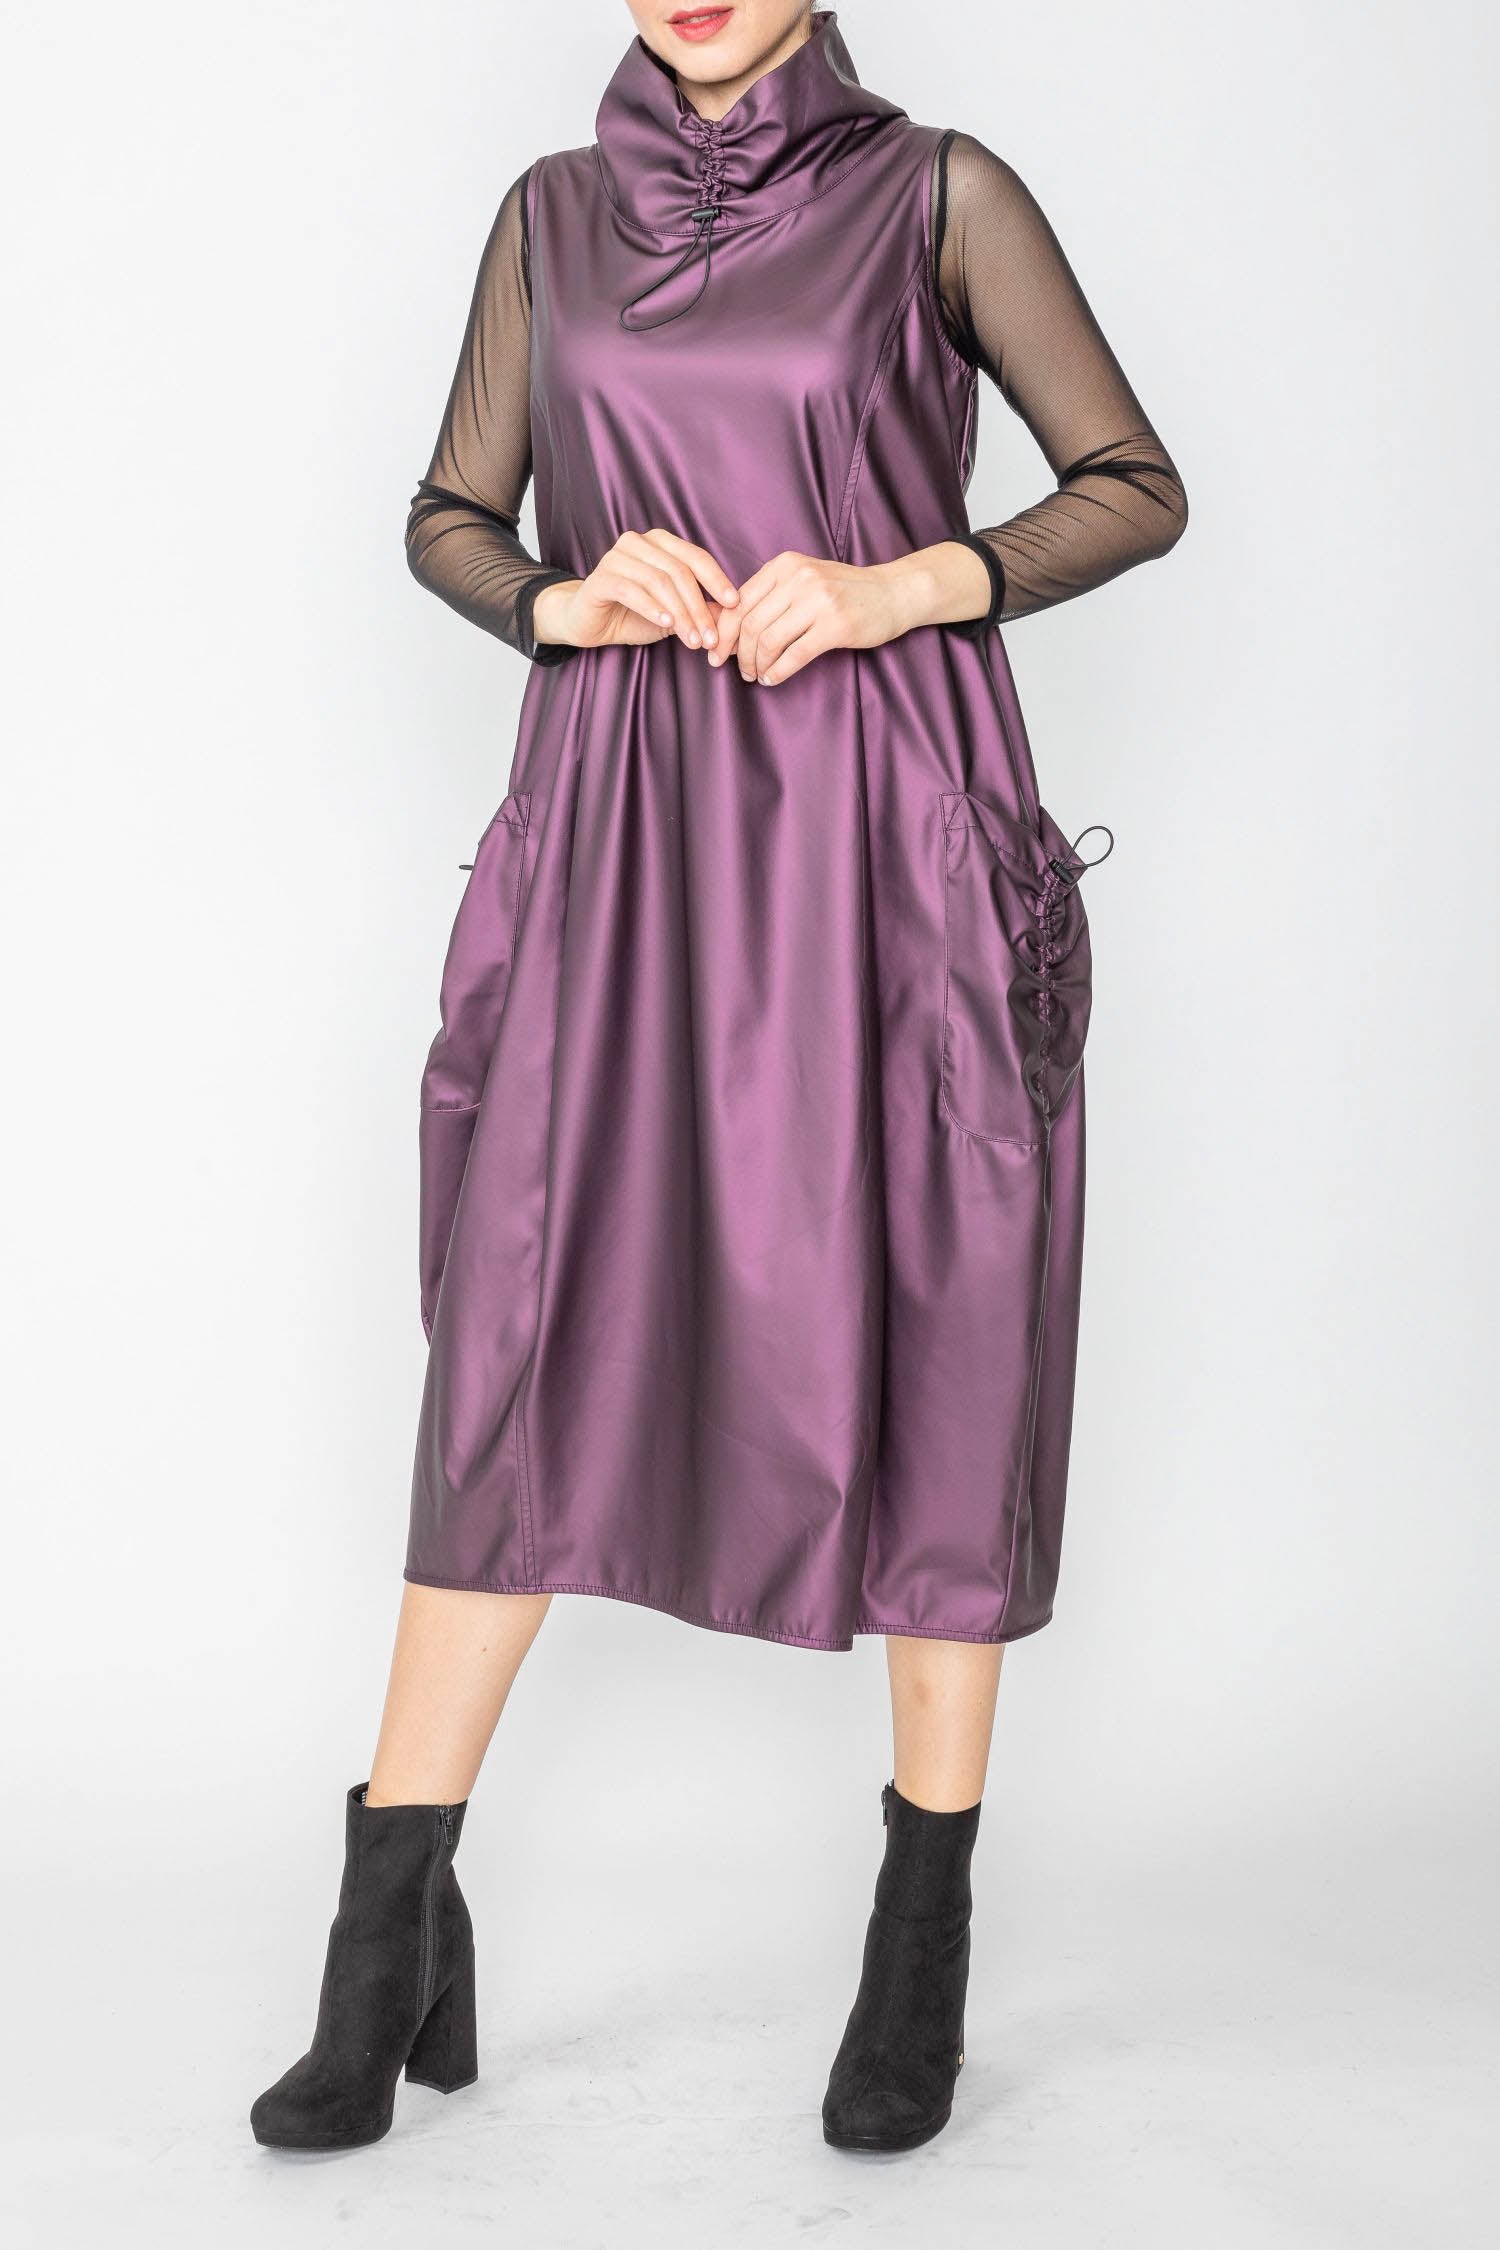 Violet Side Design Pocket Sleeveless Balloon Dress